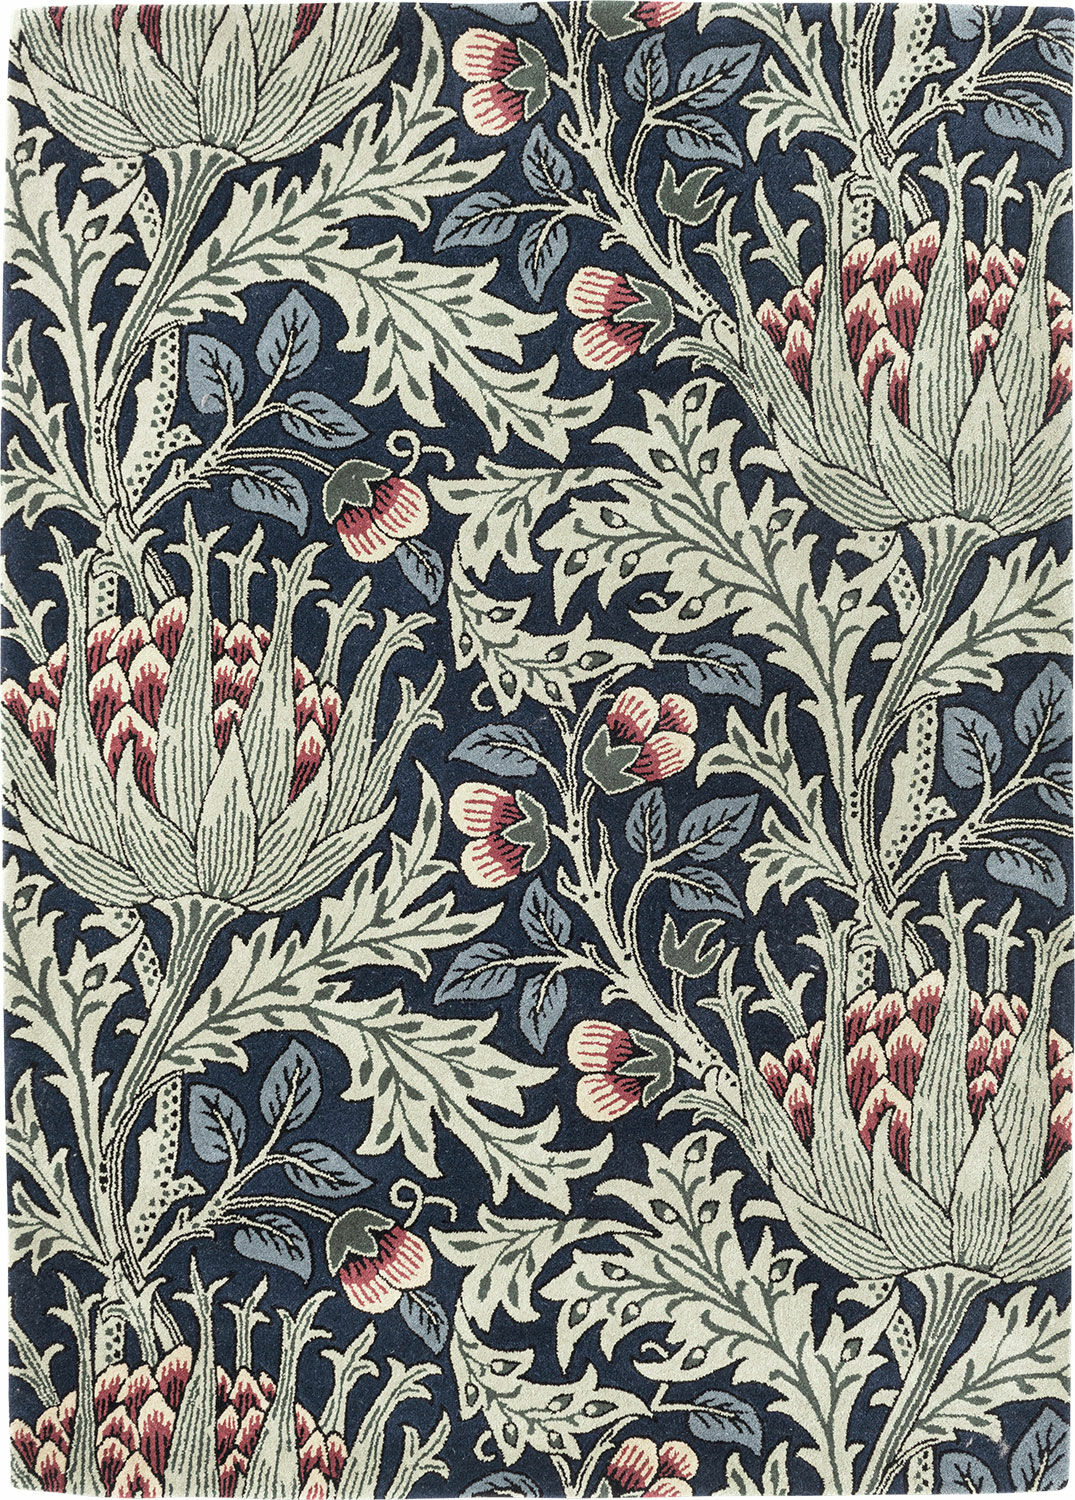 Carpet "Artichoke" (170 x 240 cm) - after William Morris